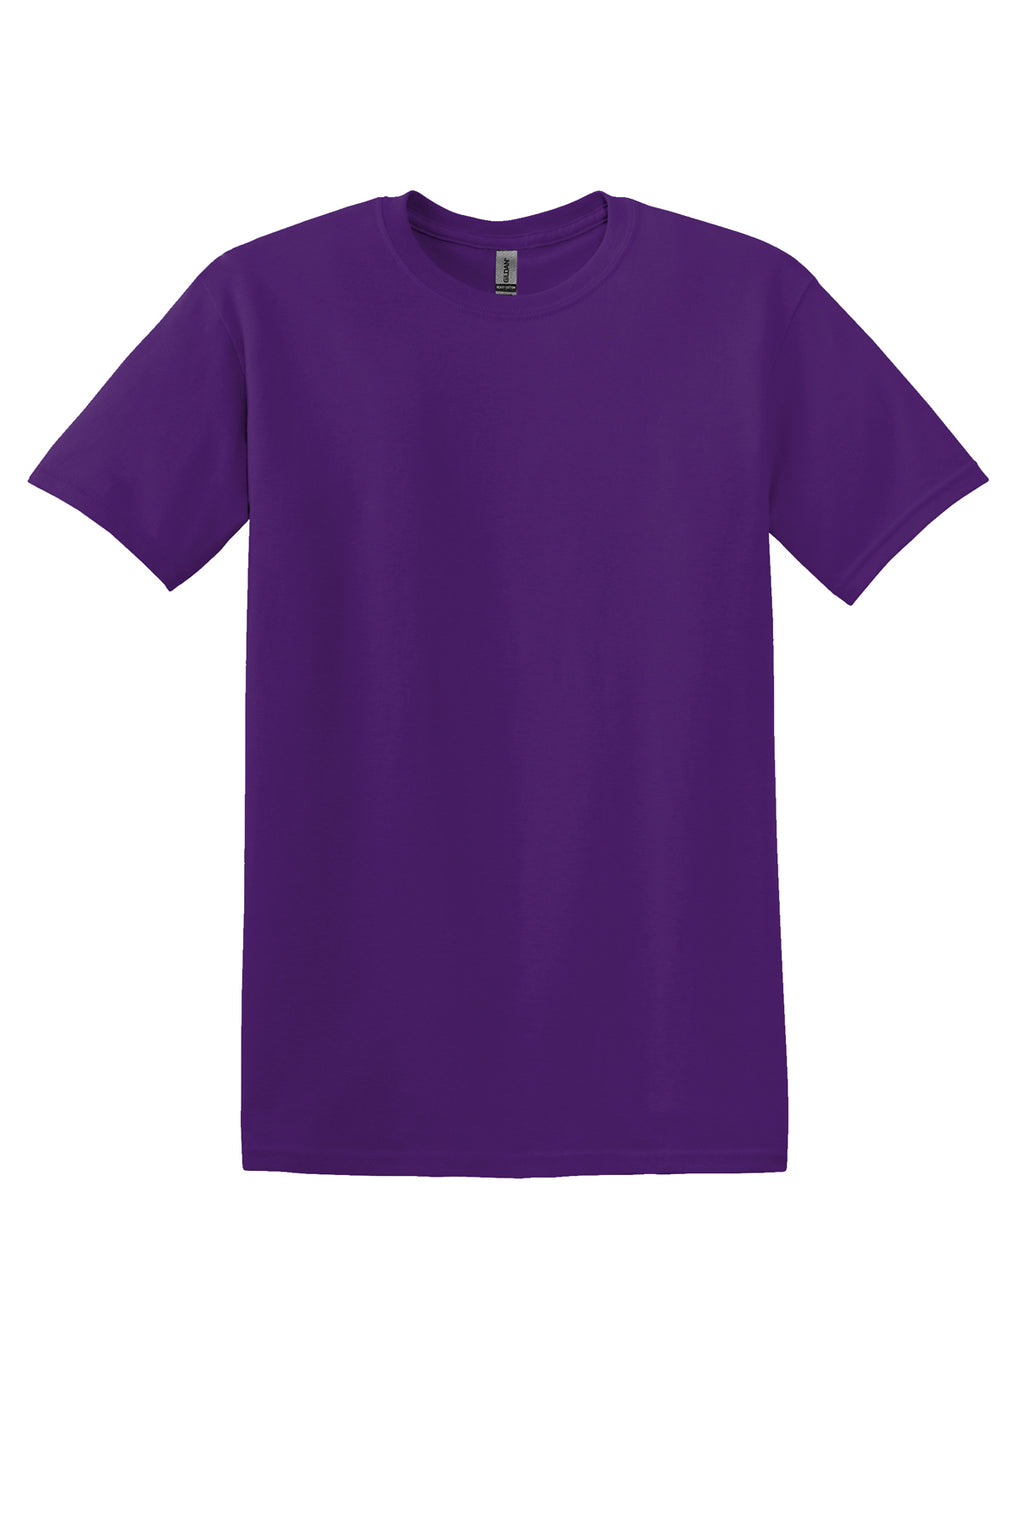 Gildan Mens/Unisex S/S Shirts Purple